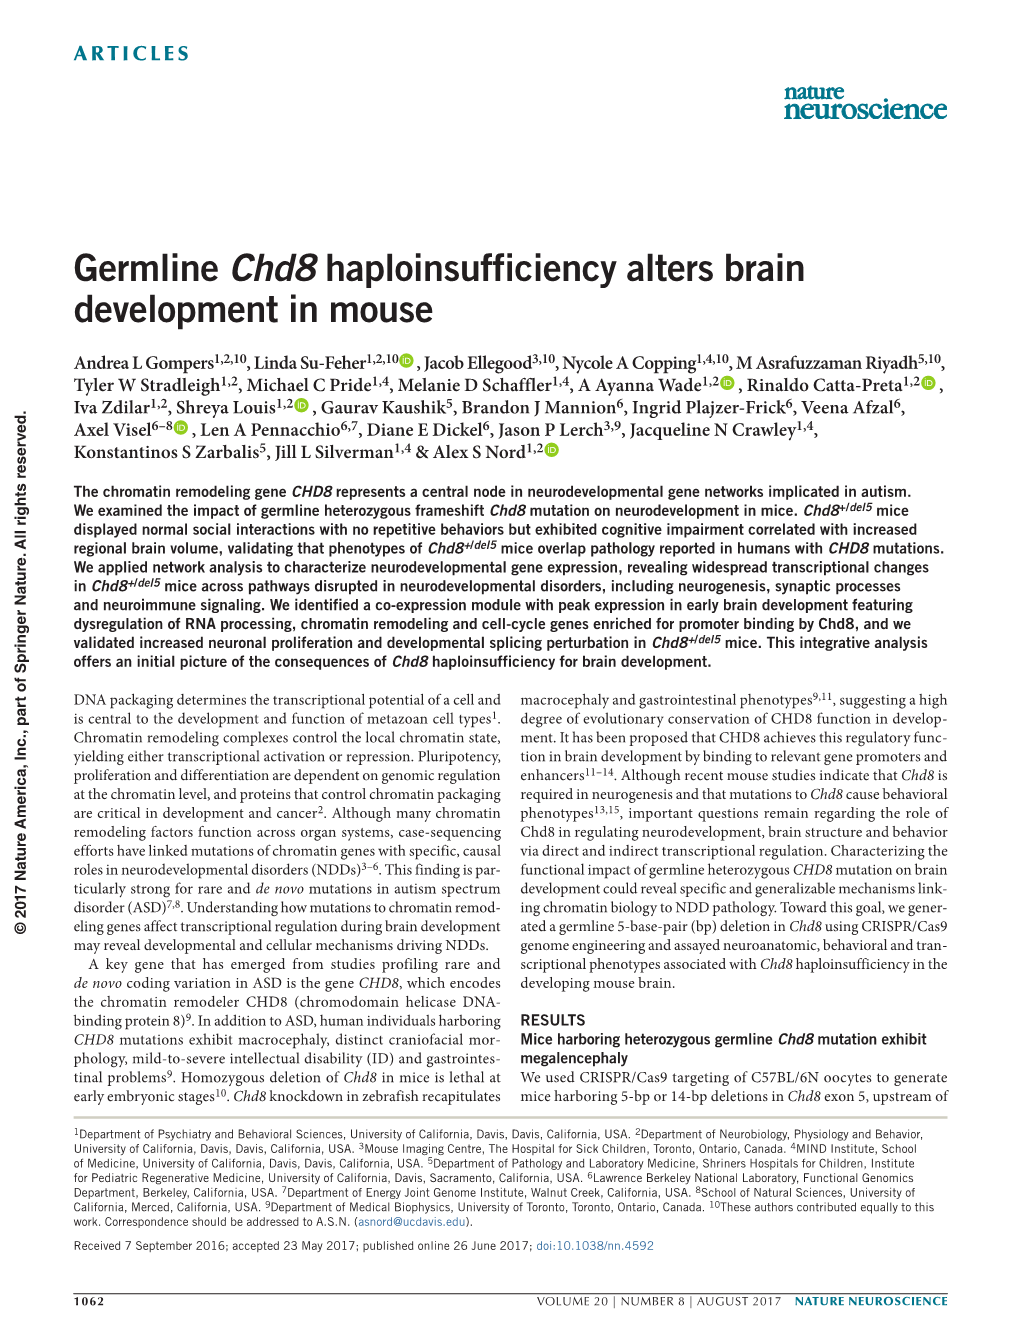 Germline Chd8 Haploinsufficiency Alters Brain Development in Mouse